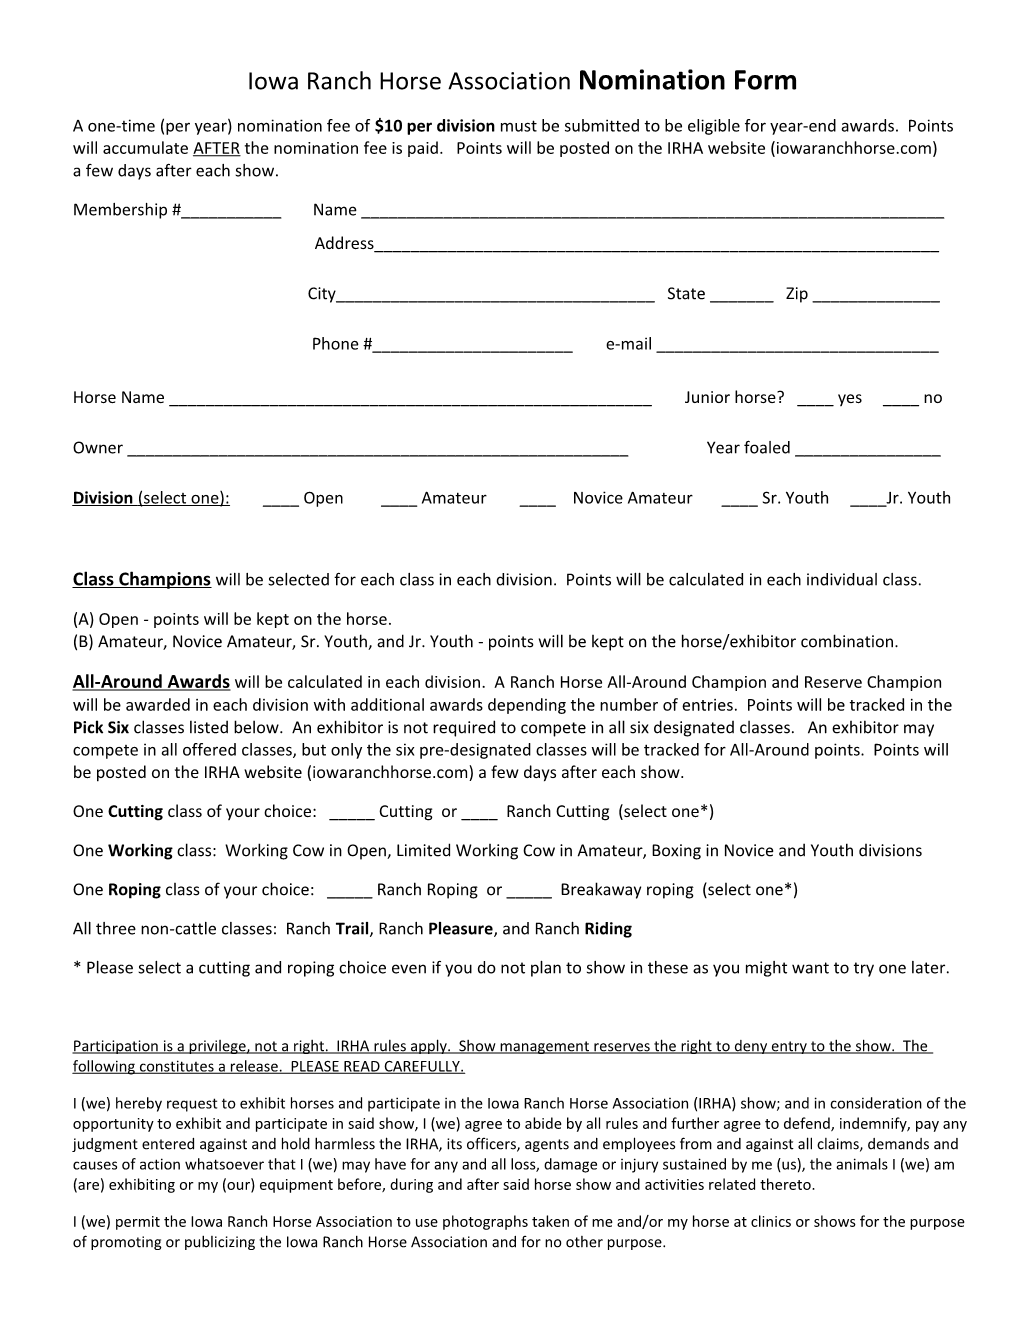 Iowa Ranch Horse Association Nomination Form